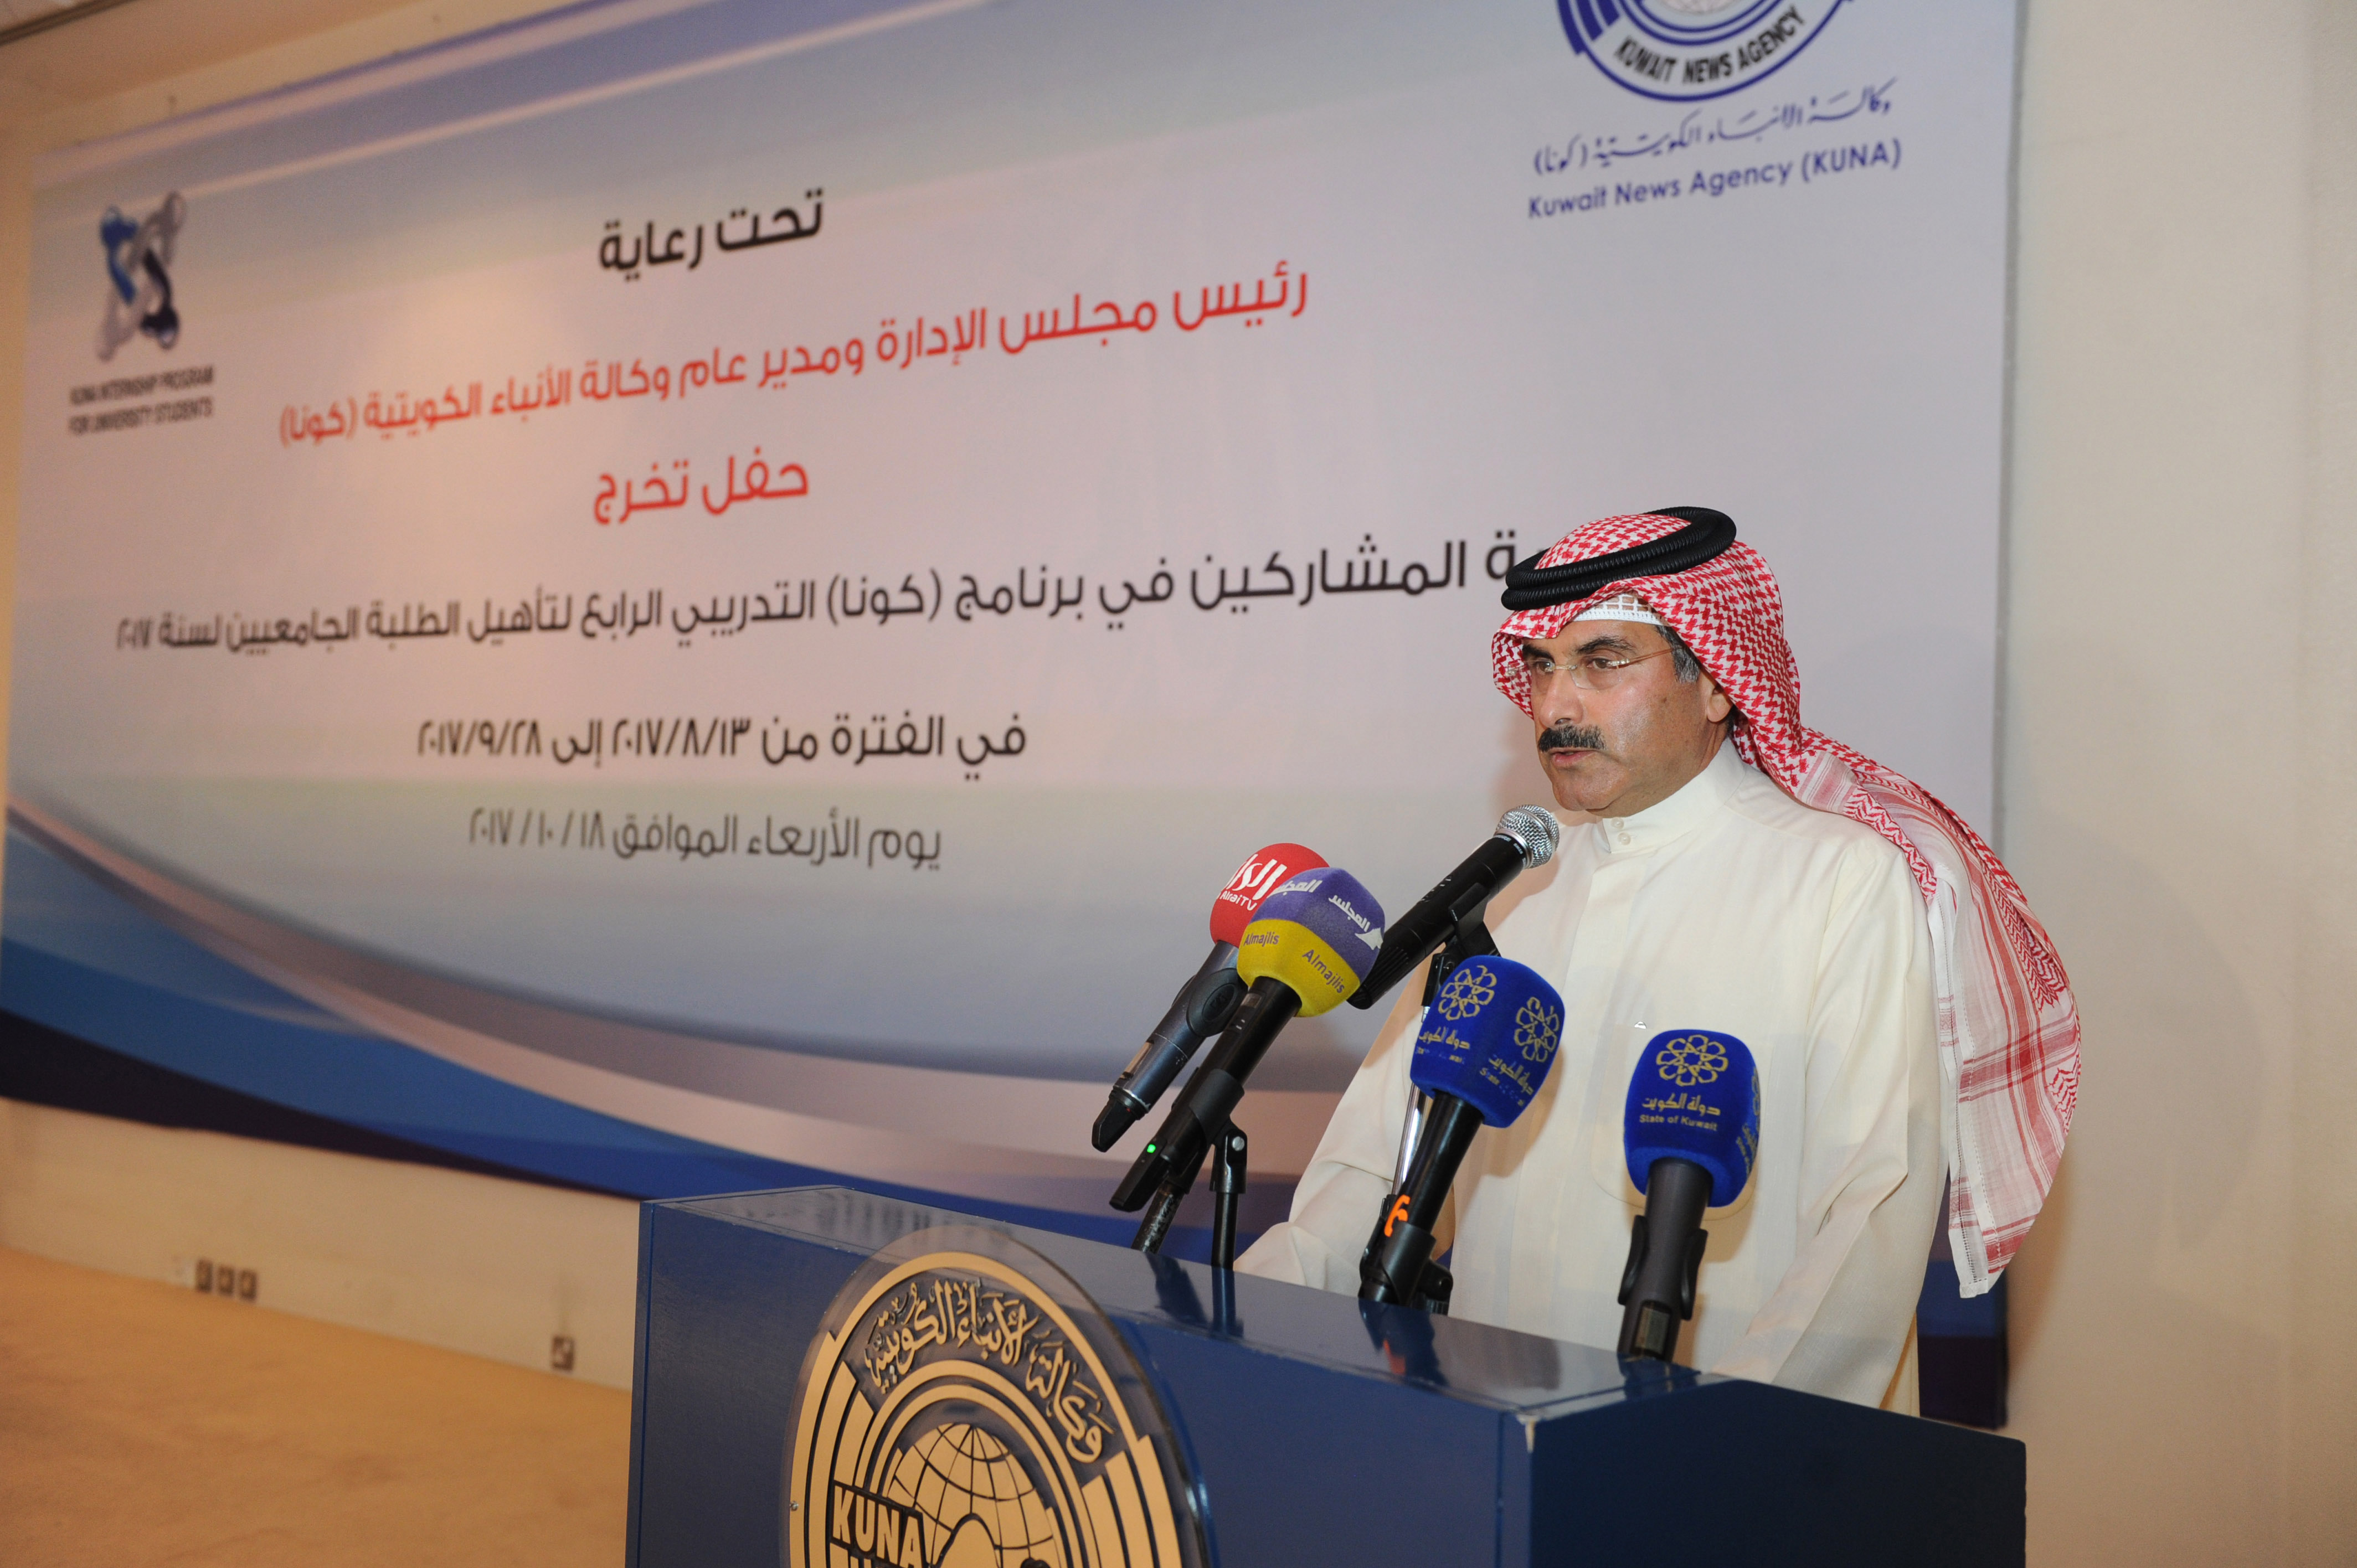 Kuwait News Agency's Board Chairman and Director General Sheikh Mubarak Al-Duaij Al-Ibrahim Al-Sabah